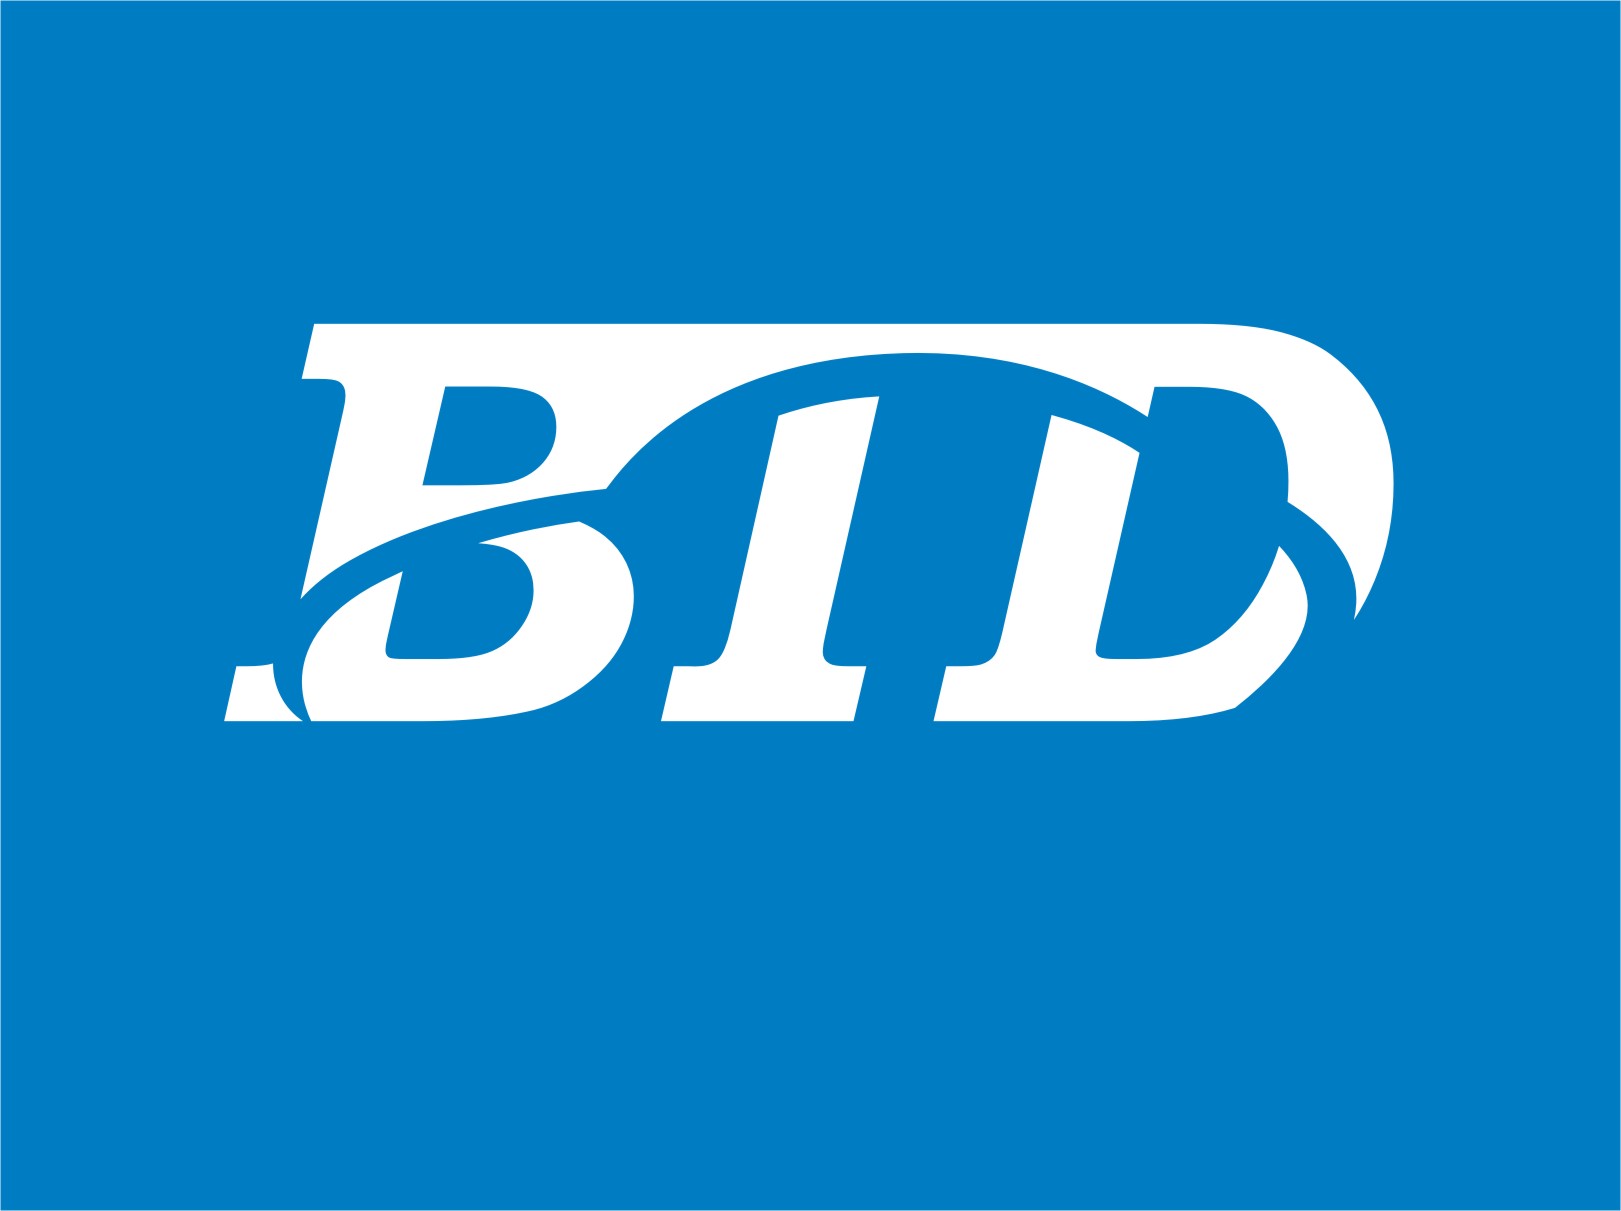 BTD Car Tools Co., Ltd.